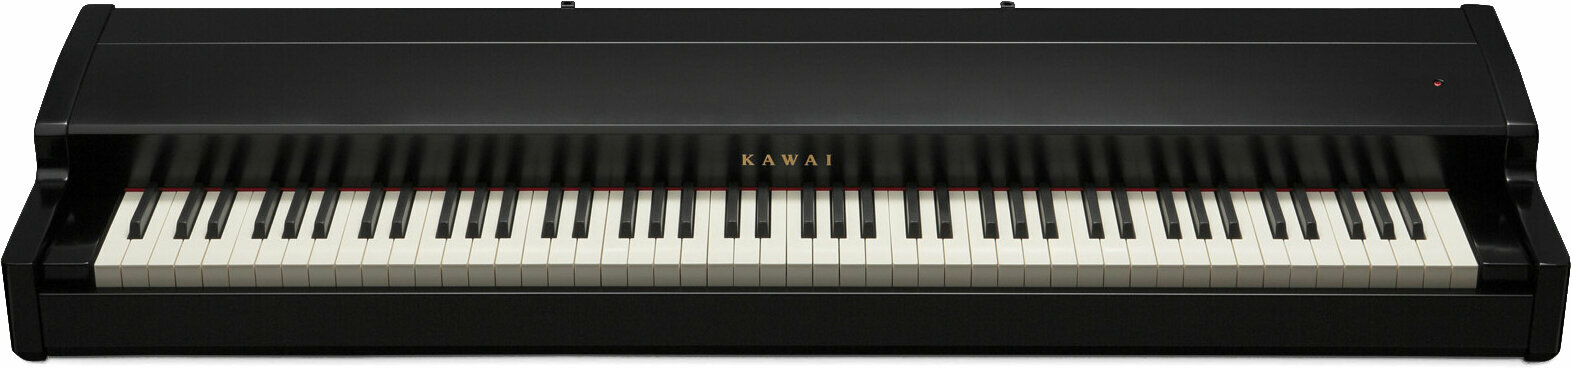 MIDI keyboard Kawai VPC1